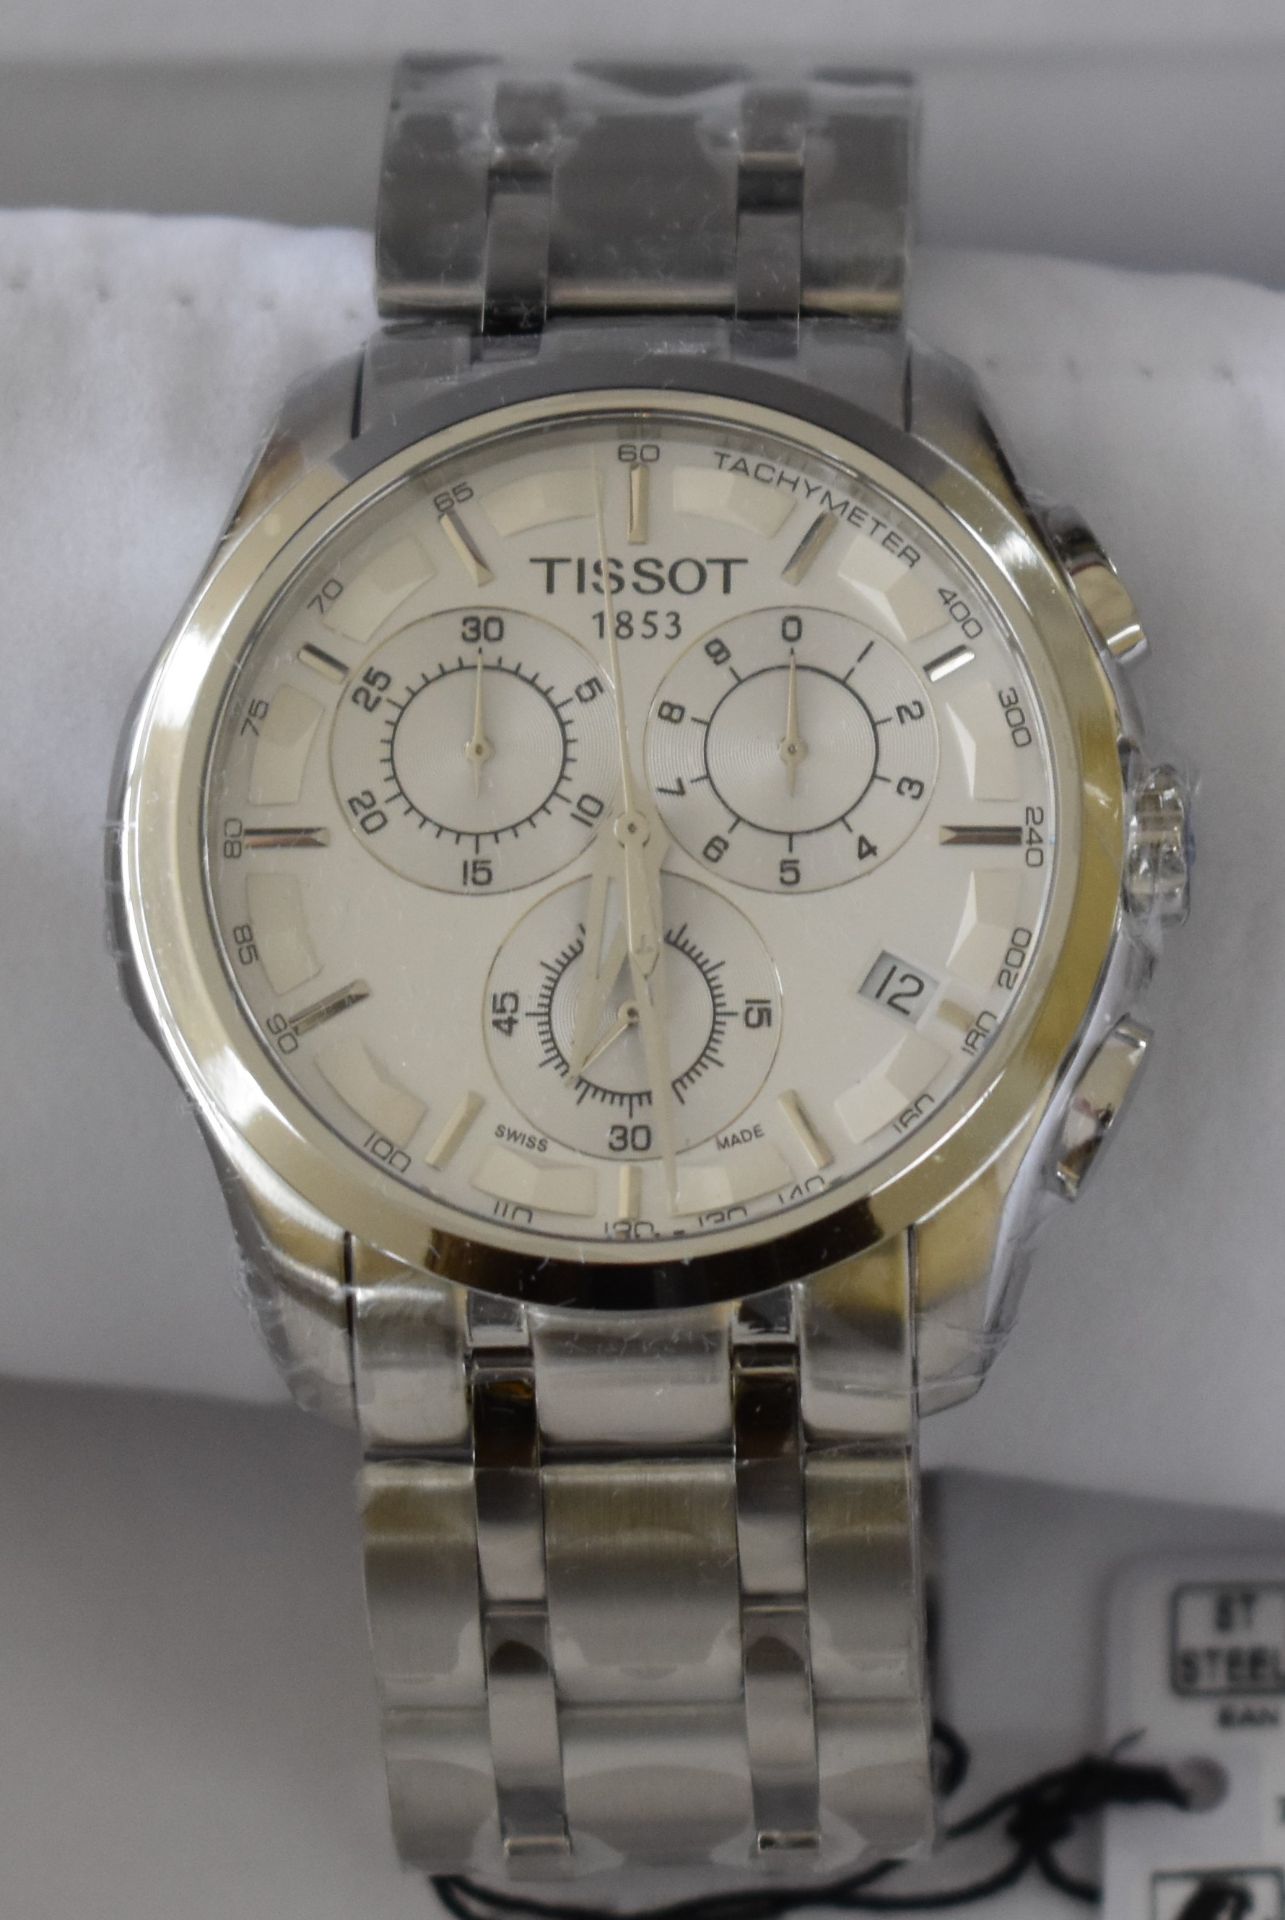 Tissot Men's Watch TO35.617.11.031.00